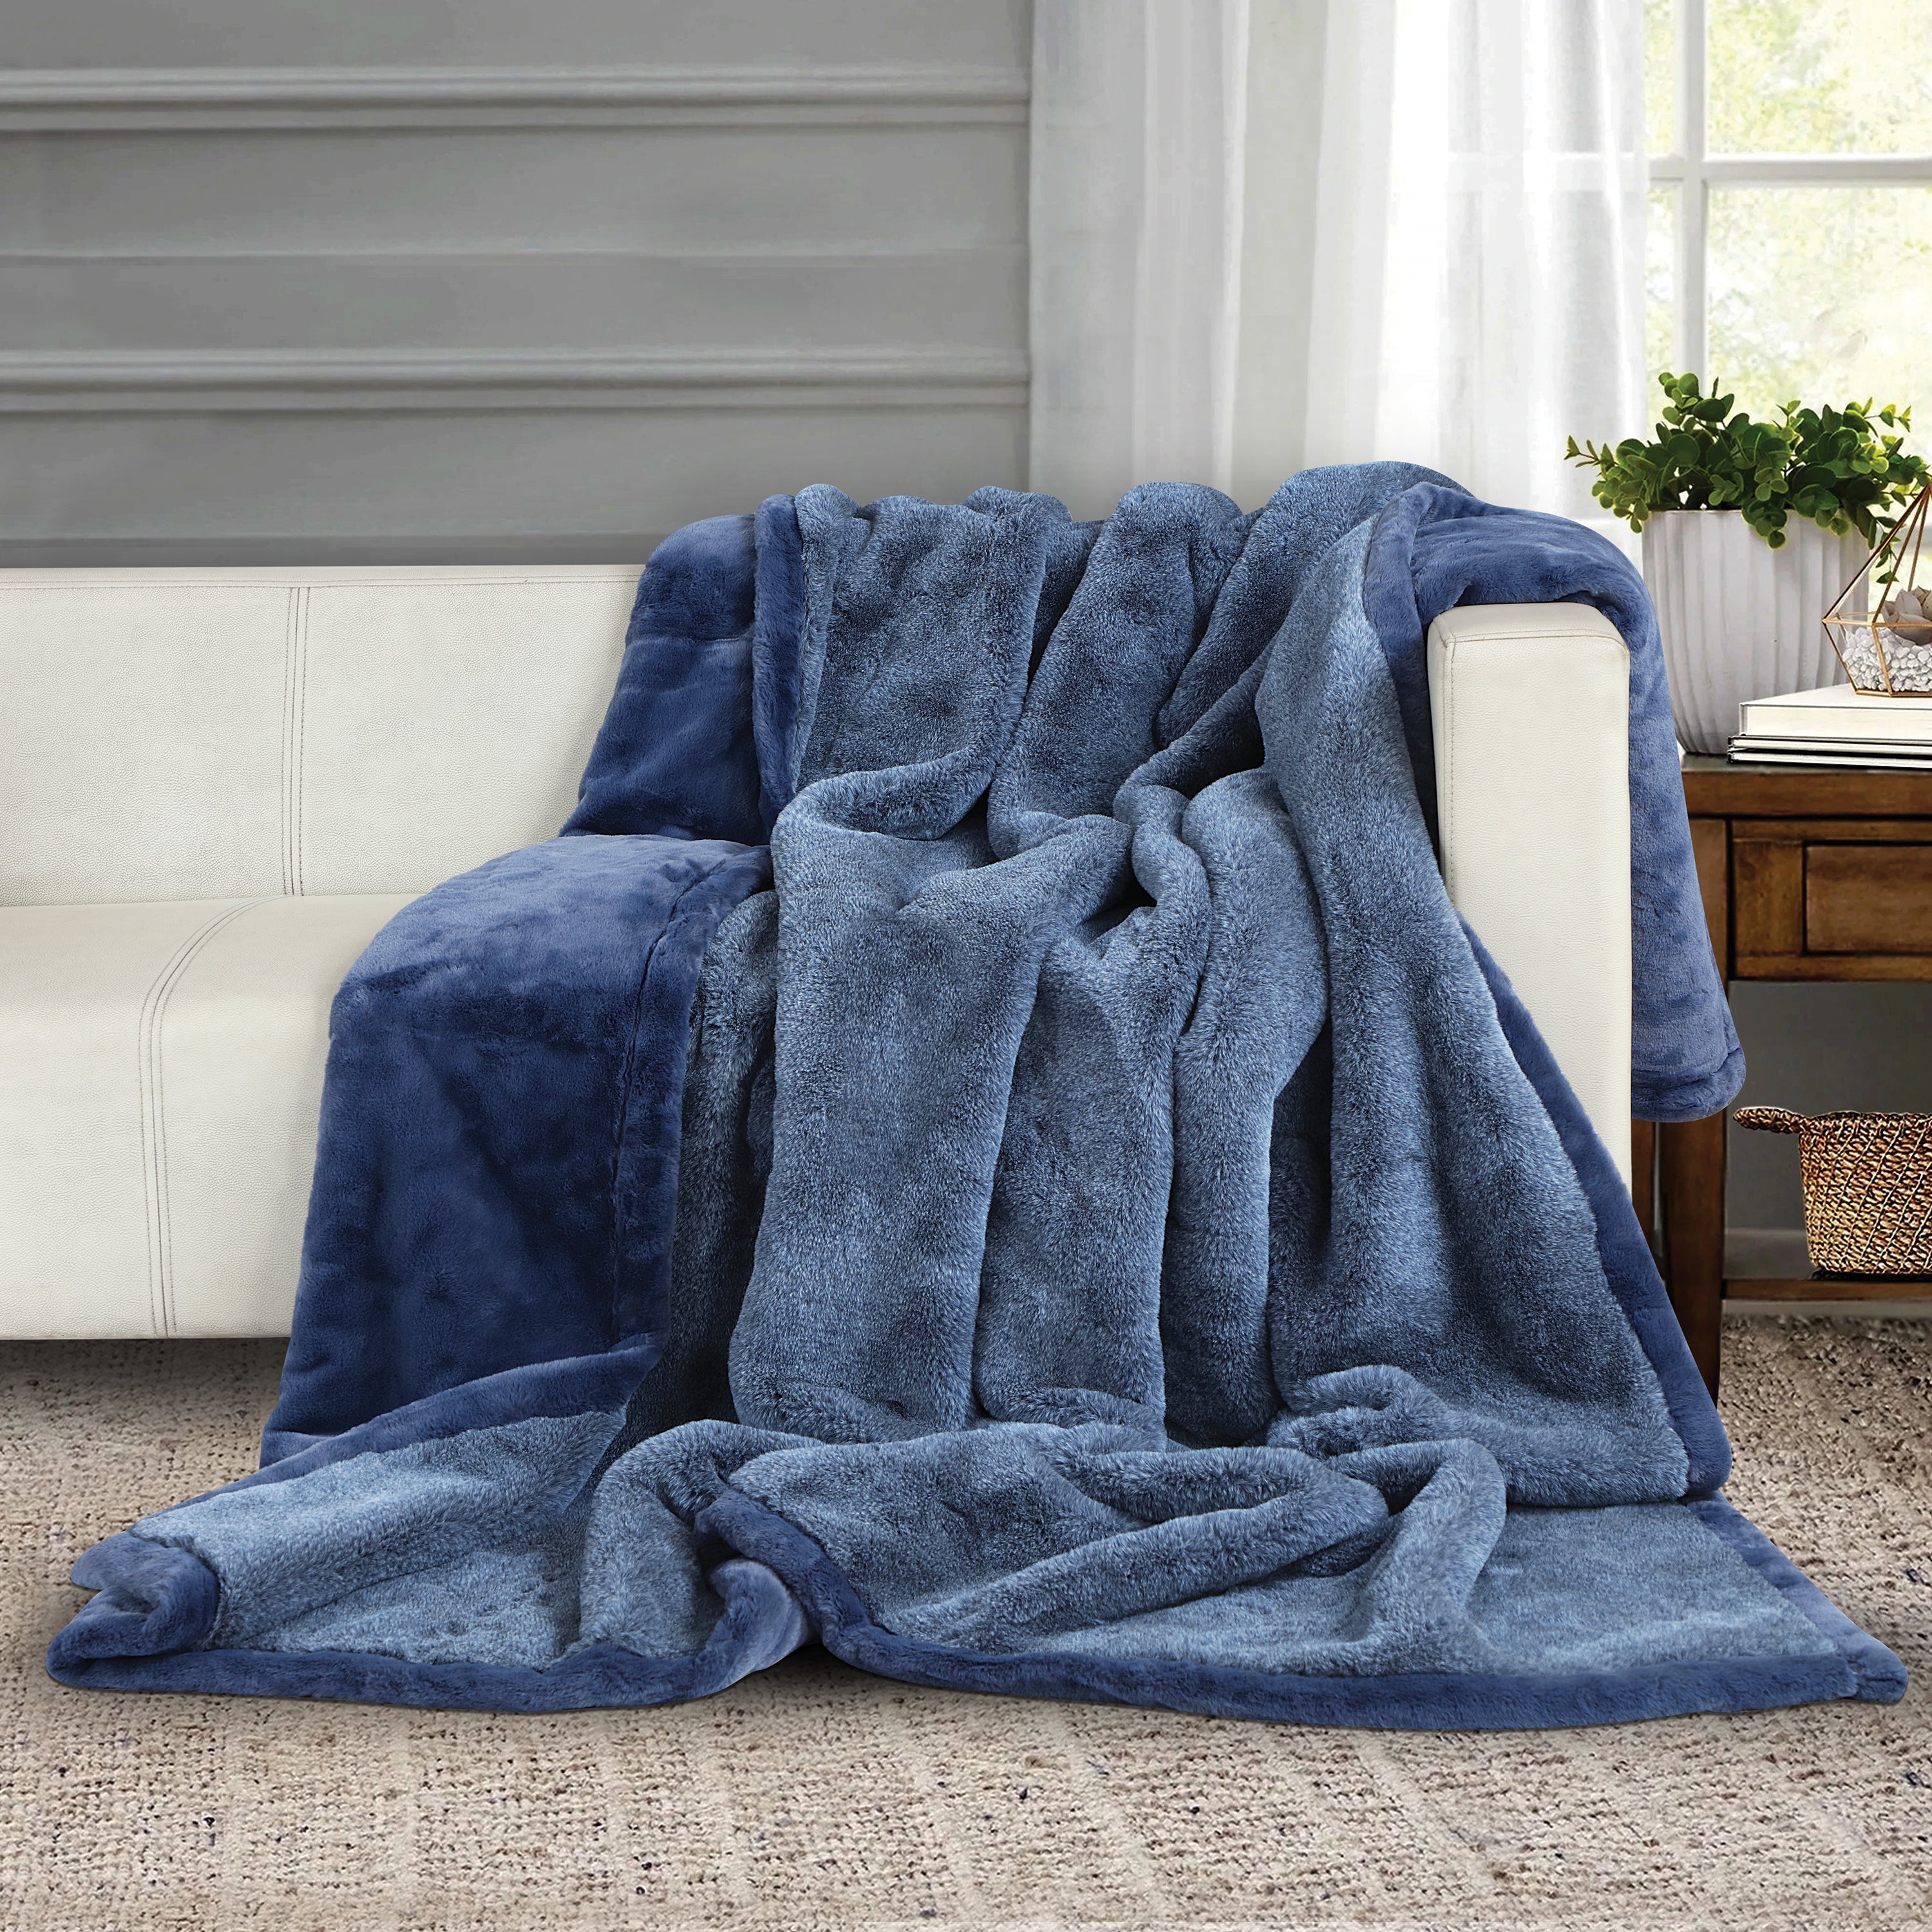 The Sapphire Blue Siberian Blanket